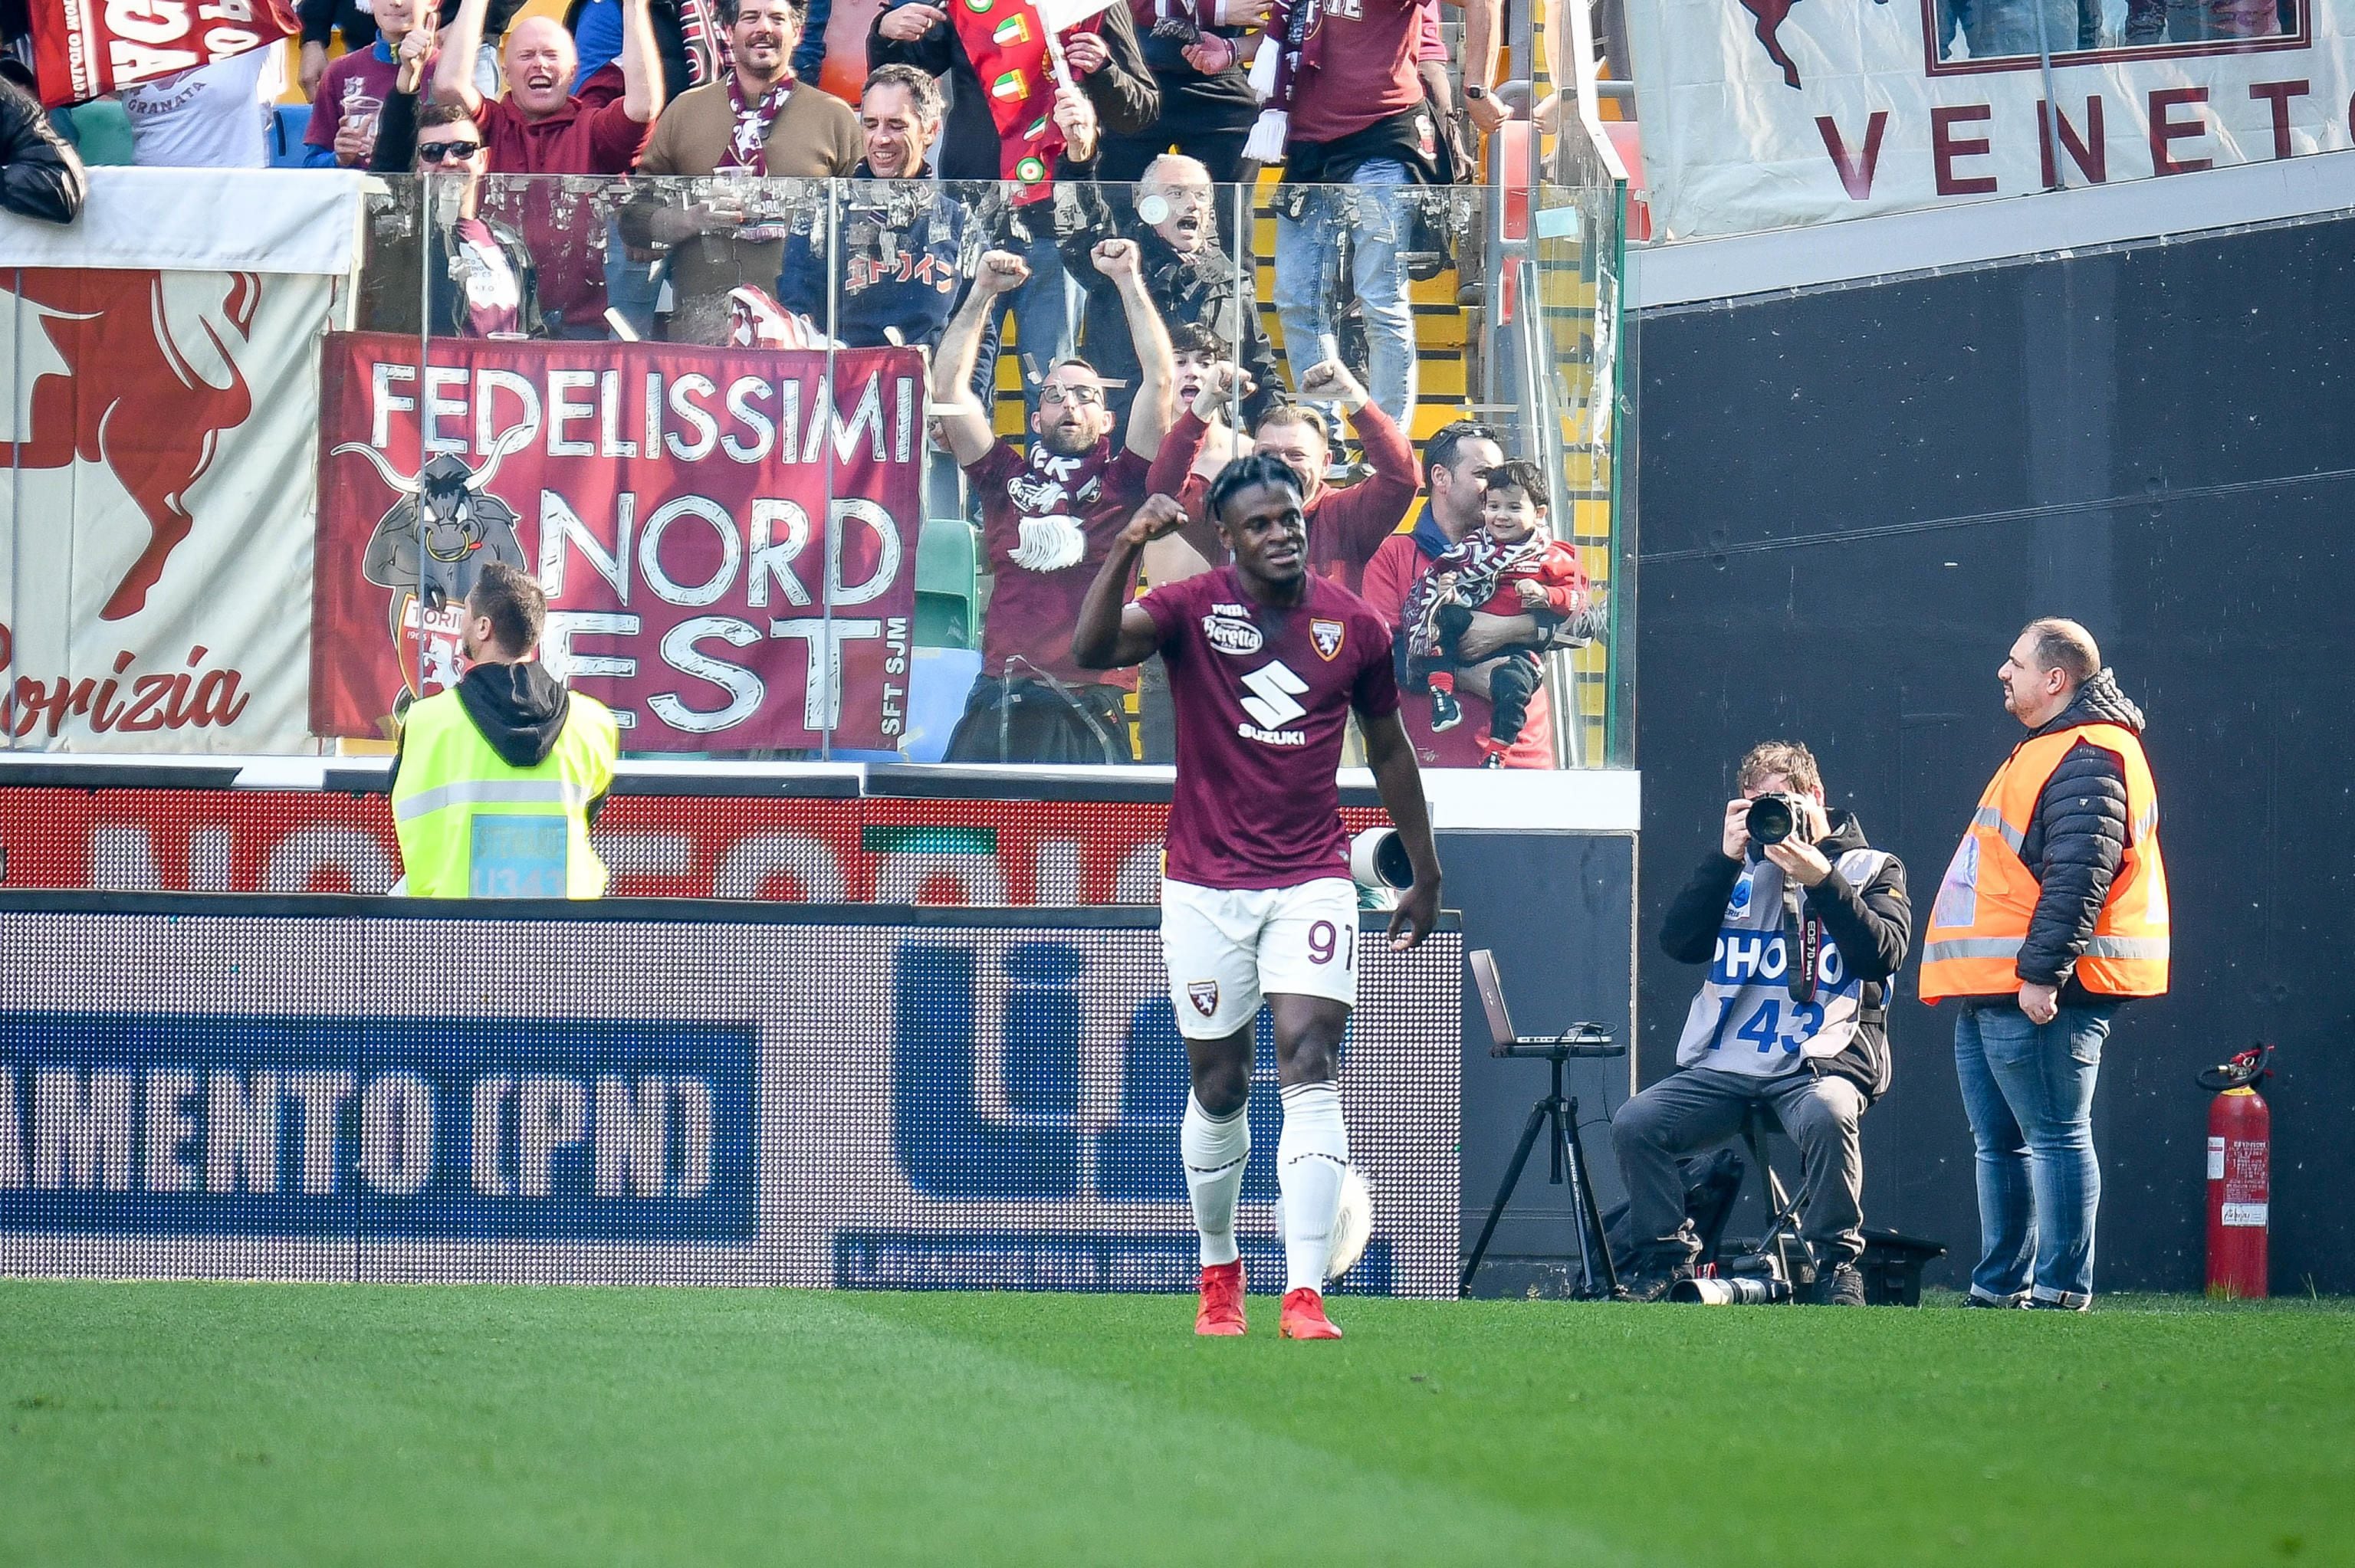 El delantero del Torino, Duvan Zapata, celebra su gol durante un partido de la Serie A que ha jugado con Torino FC - crédito EFE/EPA/Ettore Griffoni